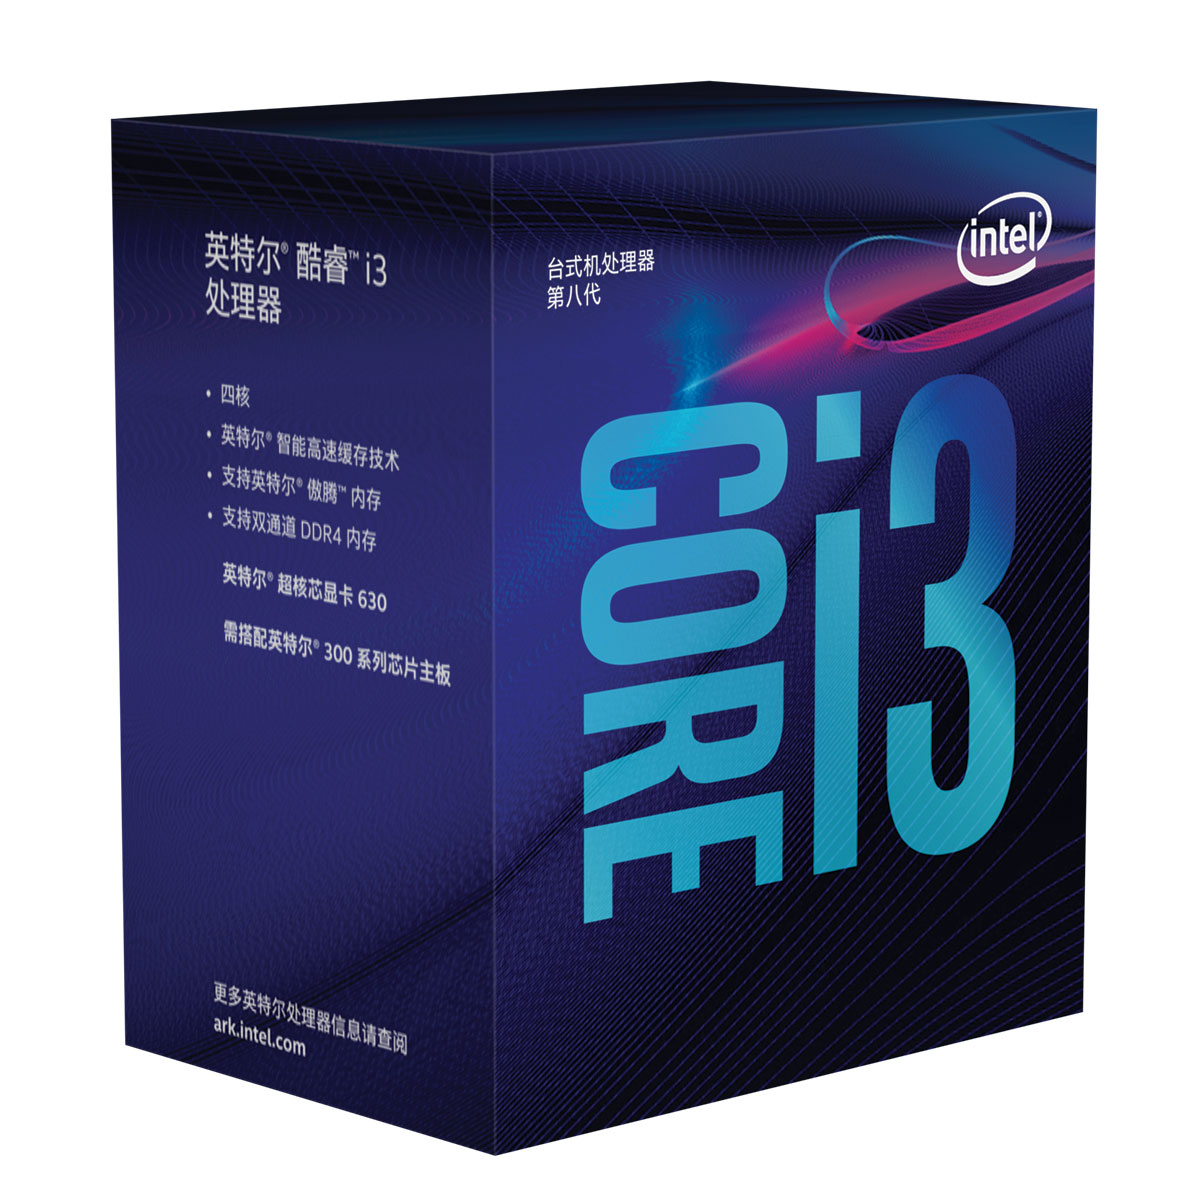 Core i3-8350K (4.0 GHz)